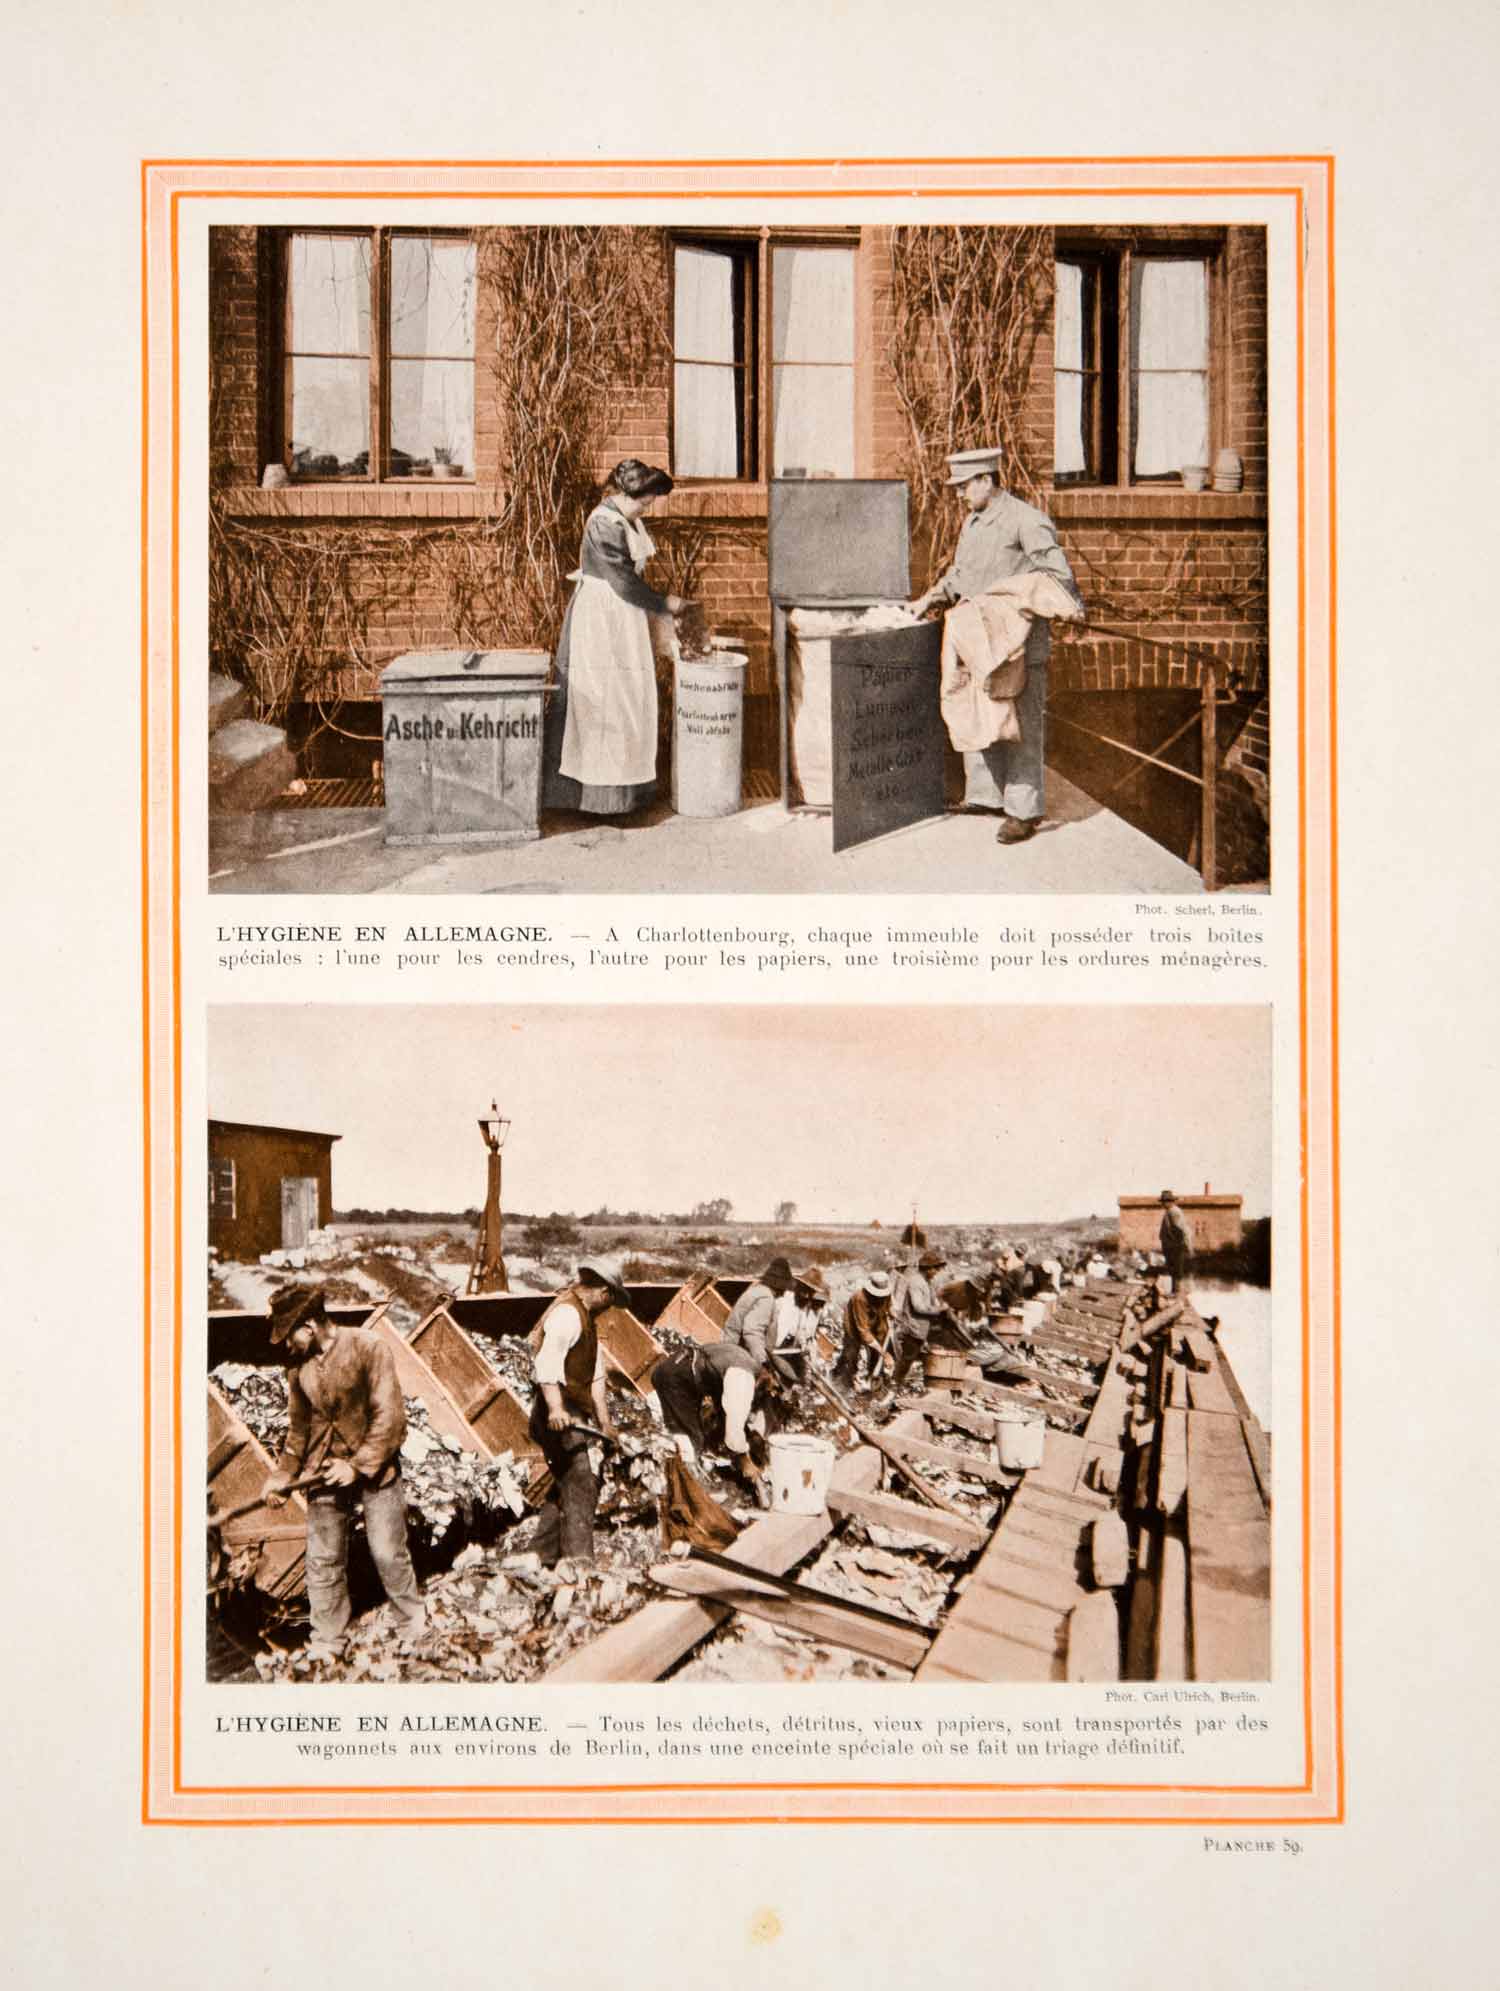 1913 Color Print Germany Sanitation Workers Trash Garbage Removal Dump Historic